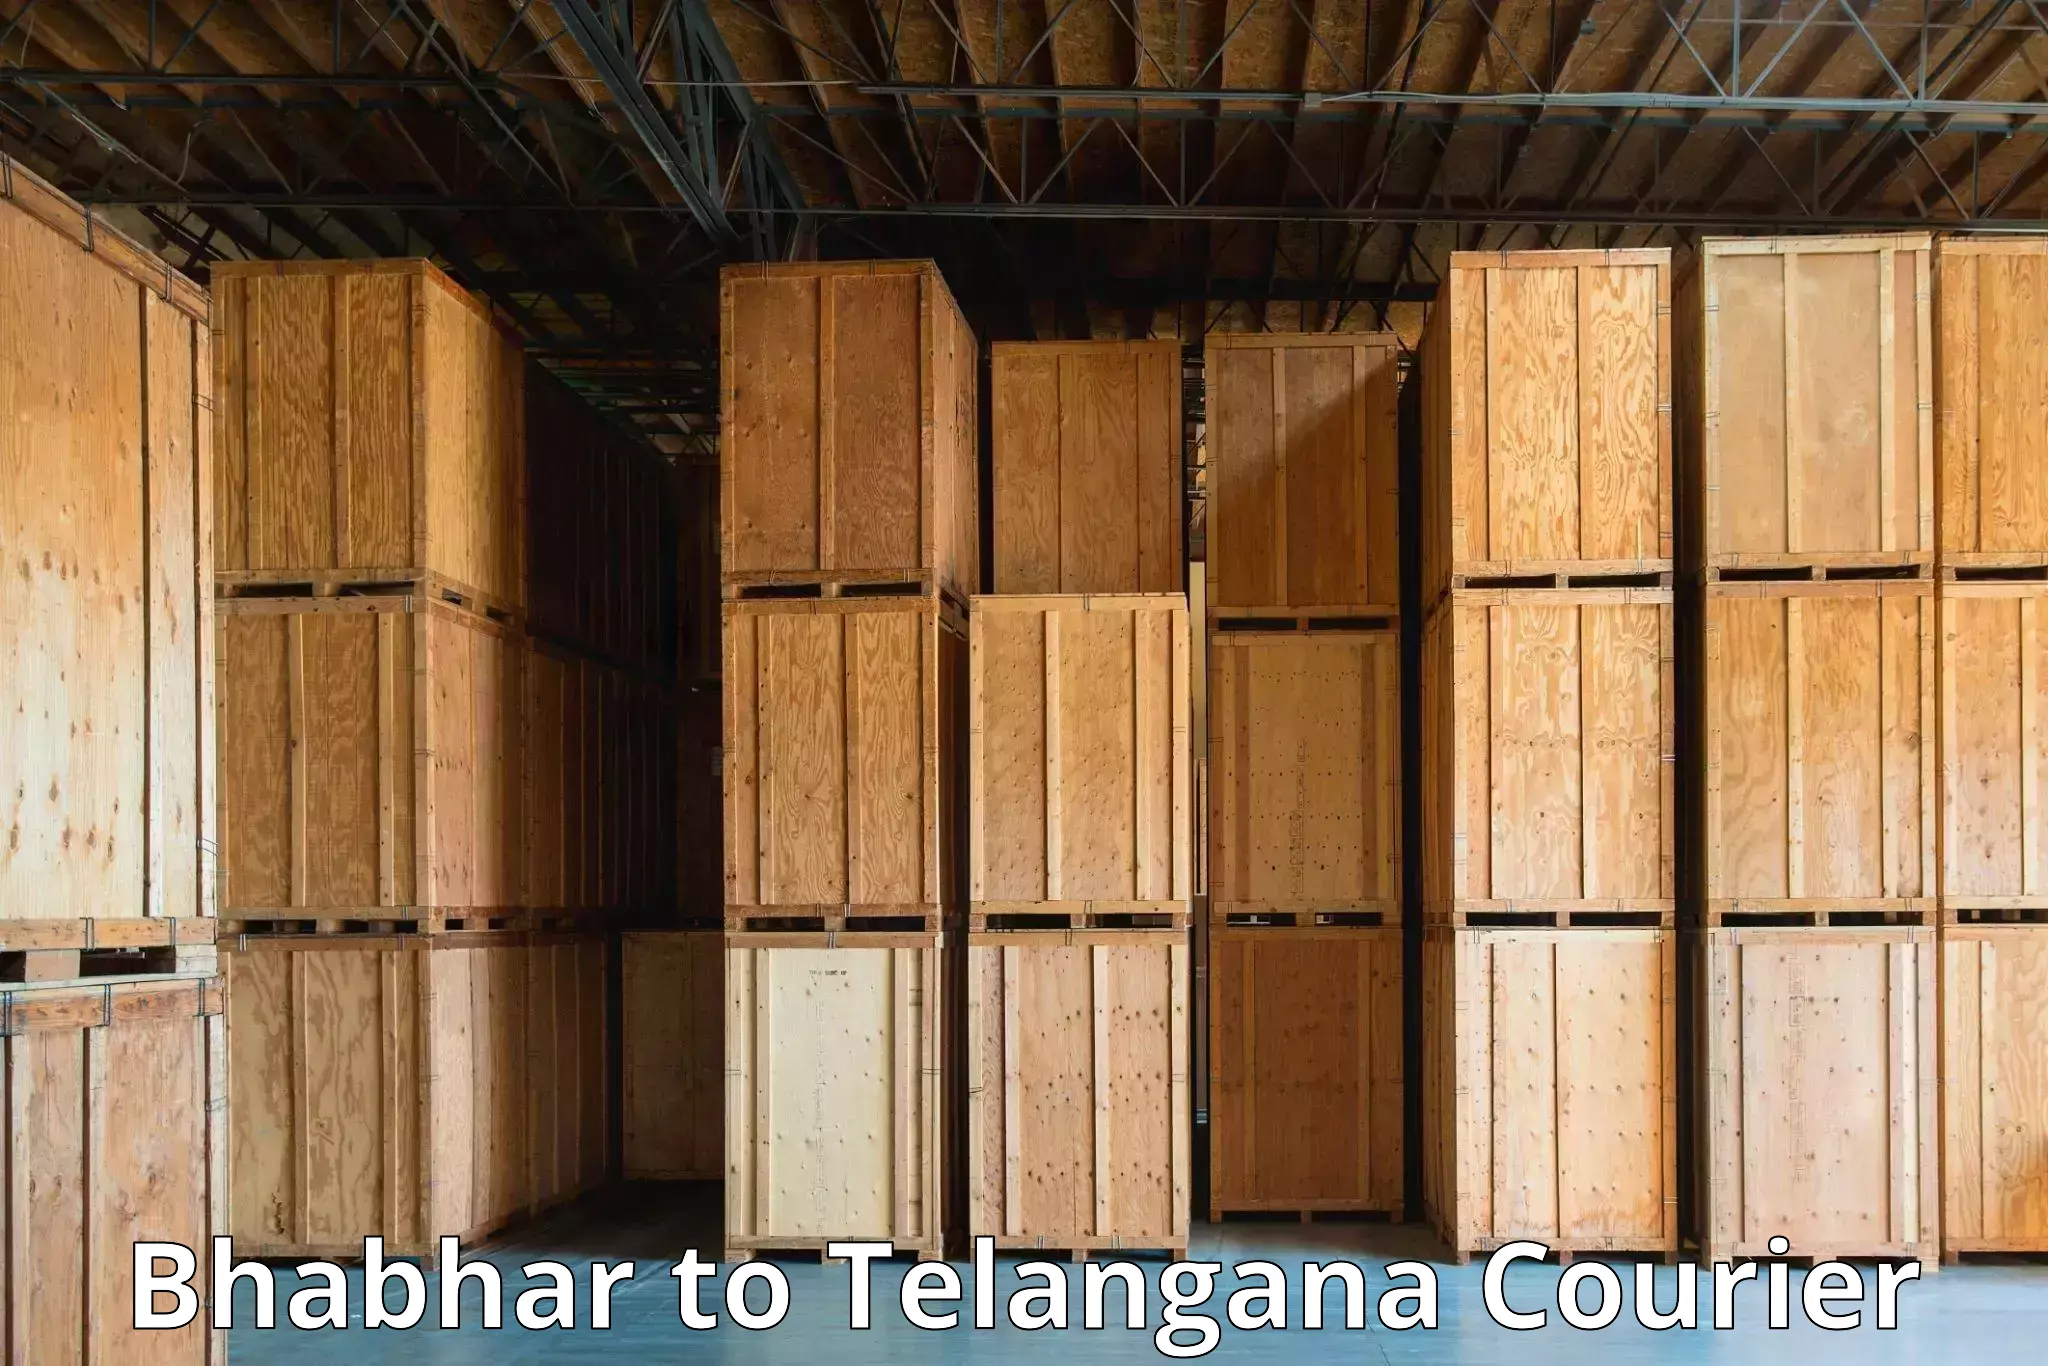 Supply chain efficiency in Bhabhar to Telangana